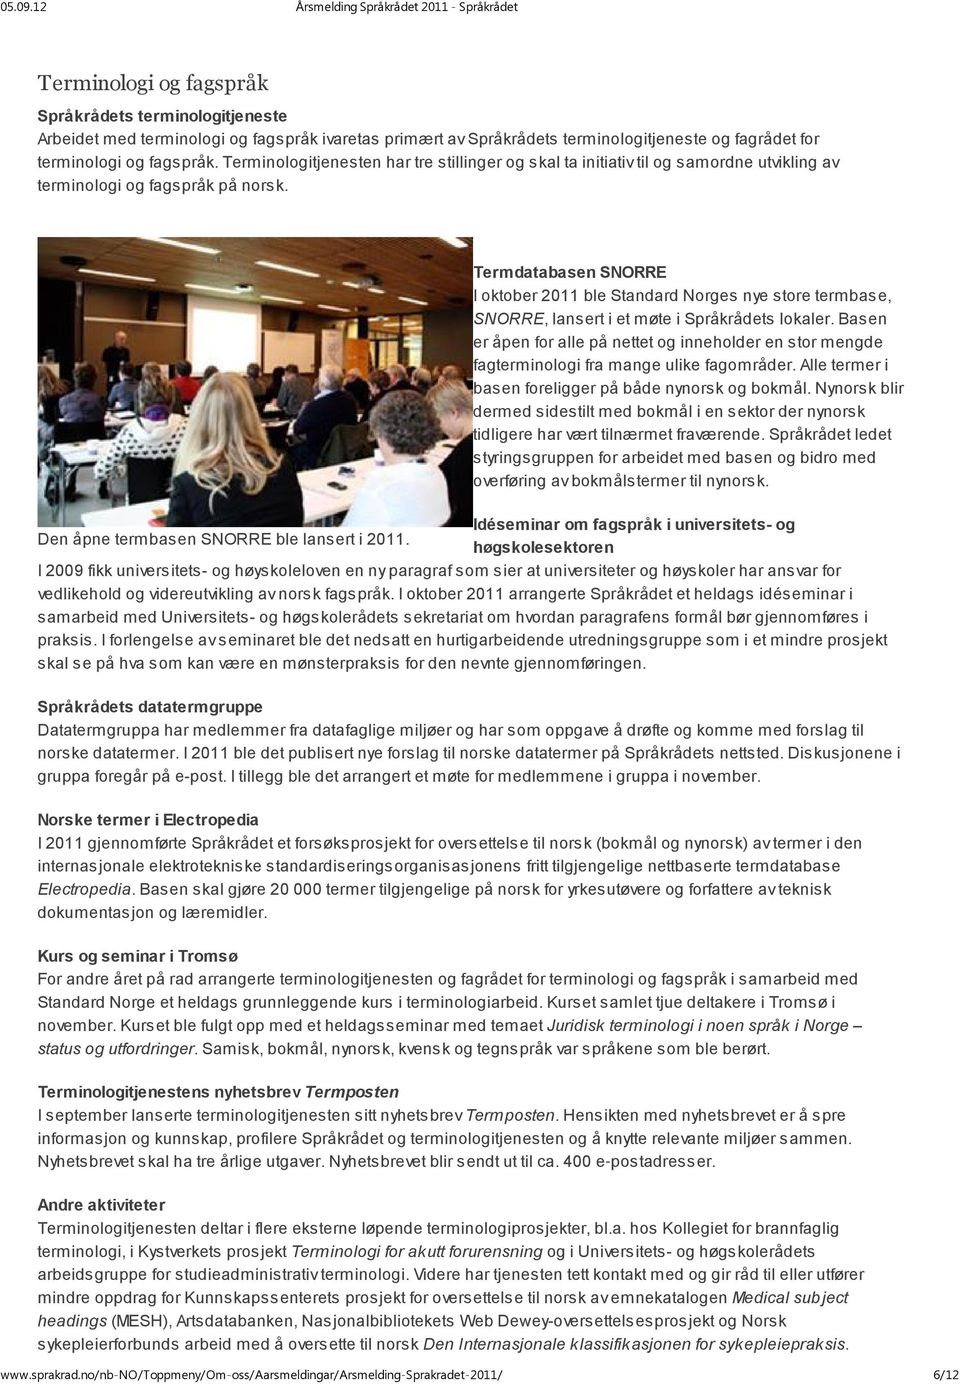 Termdatabasen SNORRE I oktober 2011 ble Standard Norges nye store termbase, SNORRE, lansert i et møte i Språkrådets lokaler.